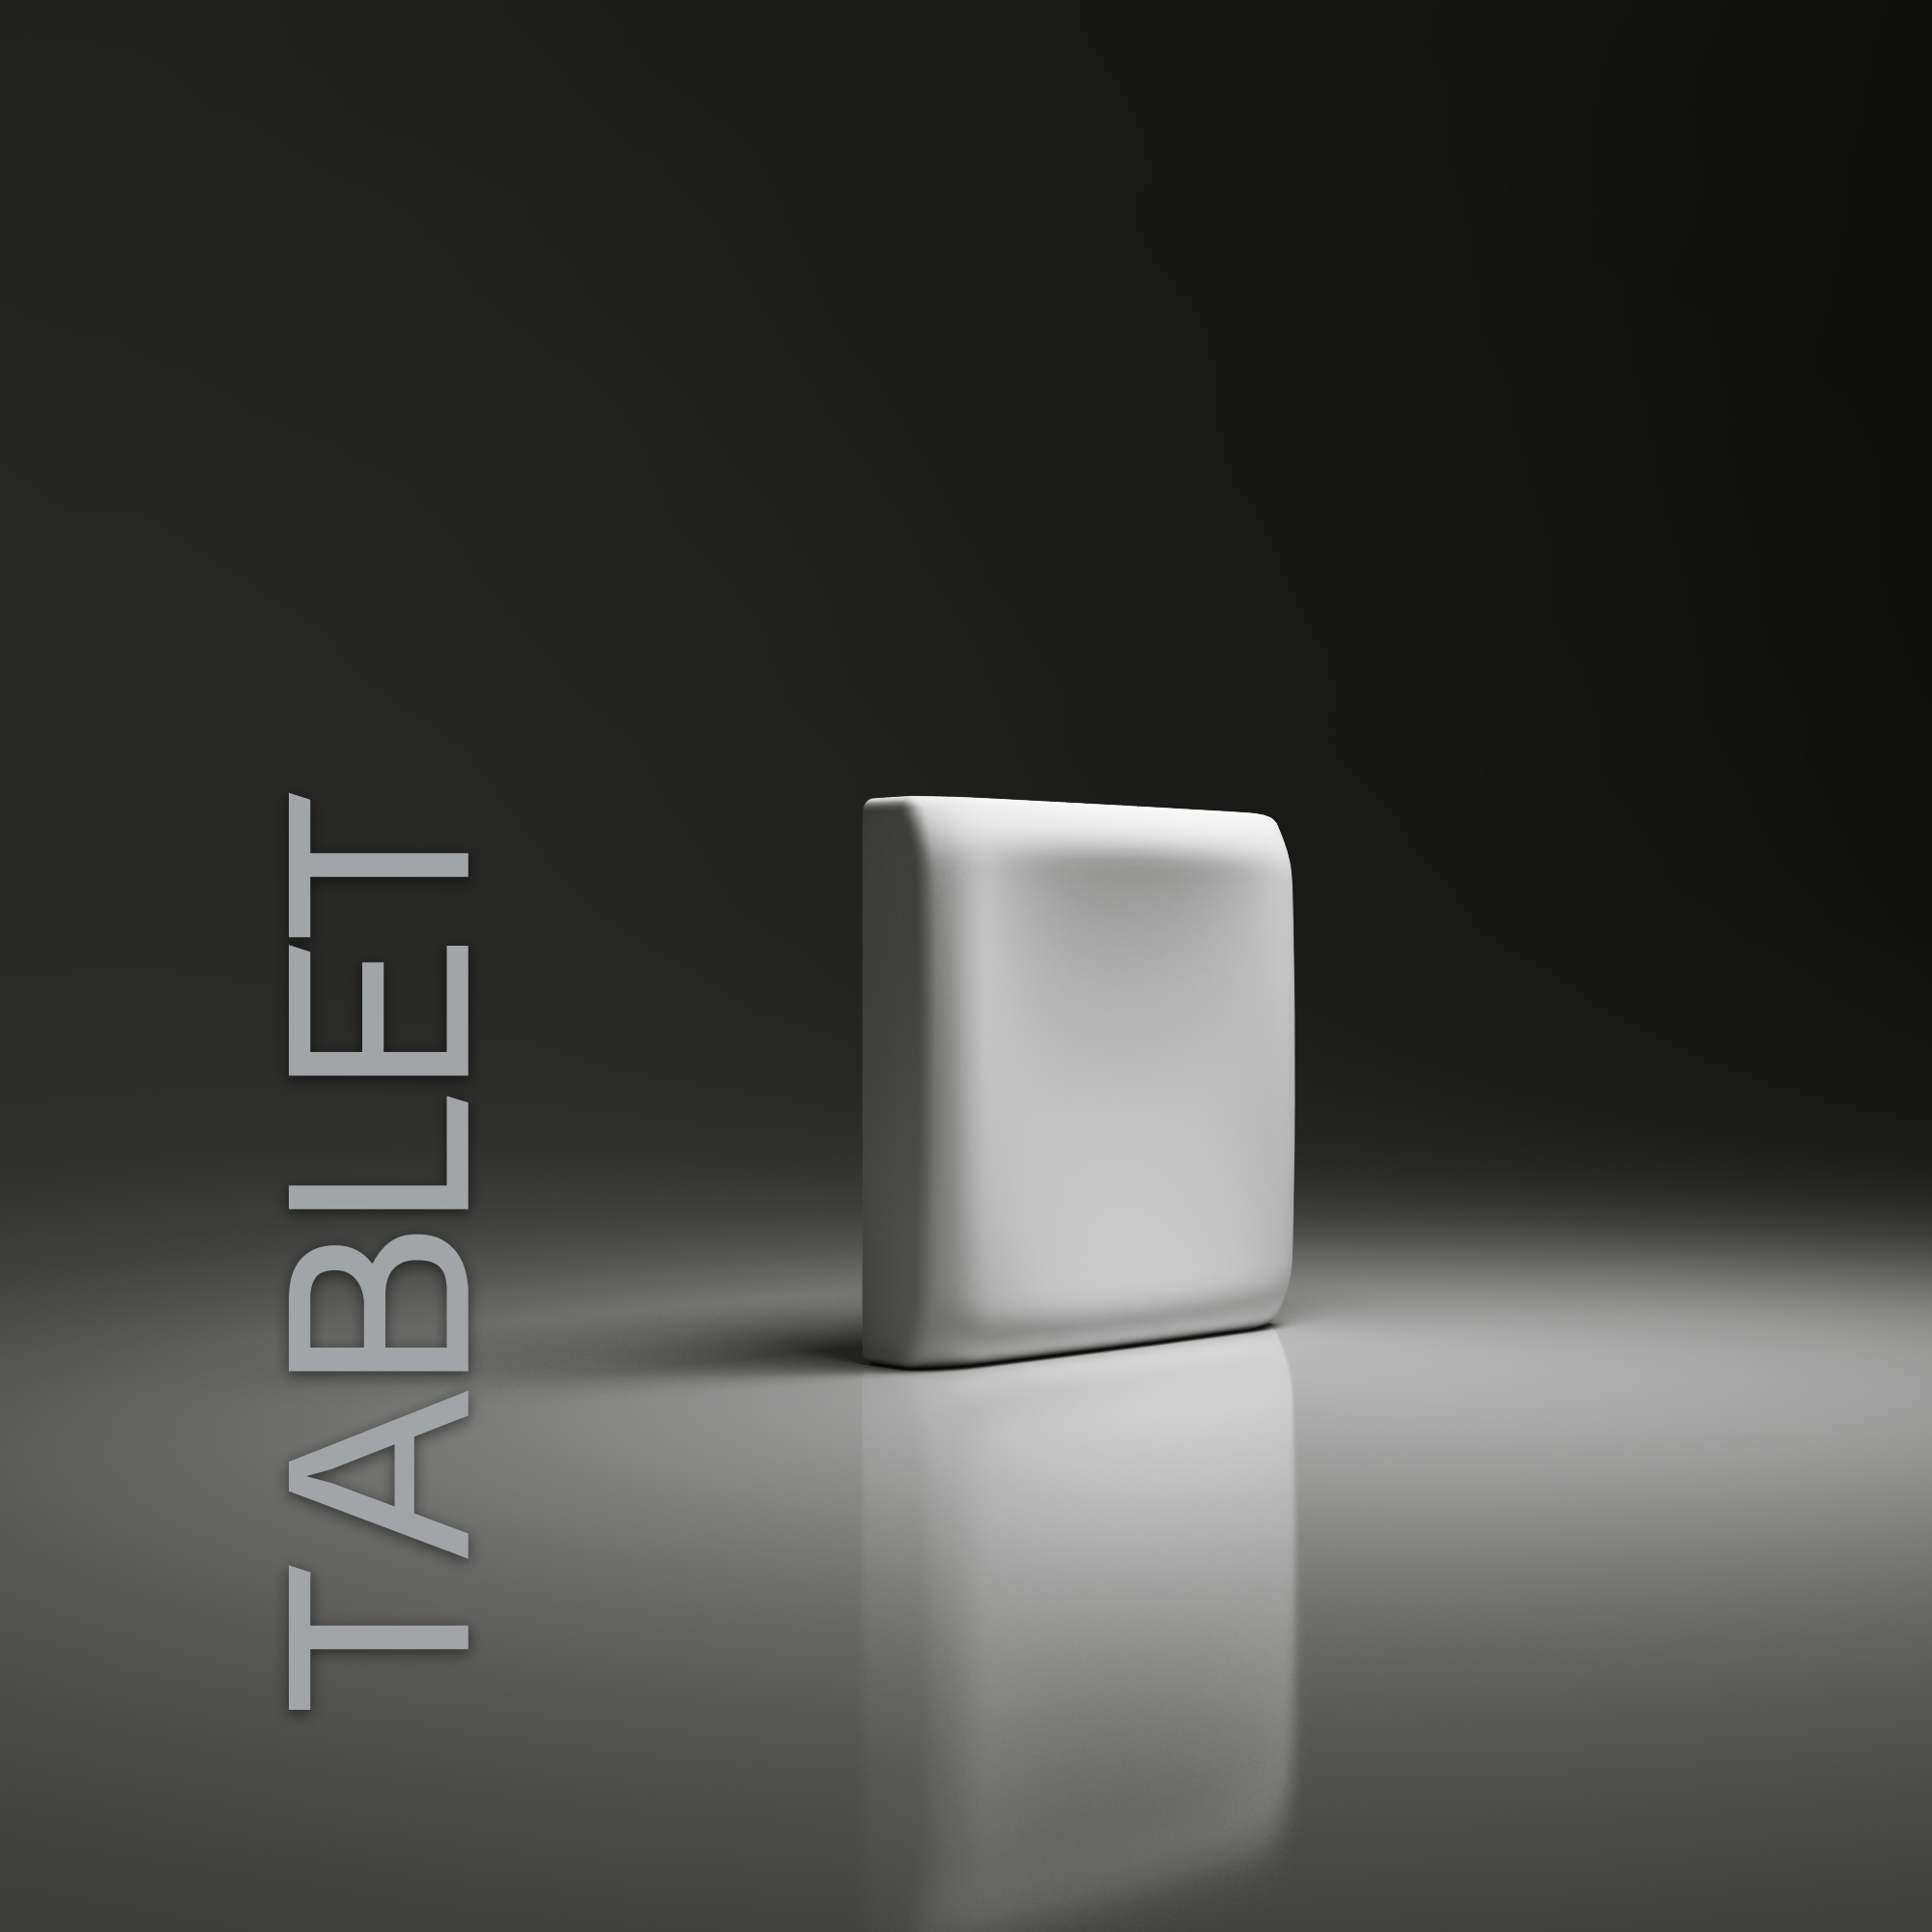 tablet1